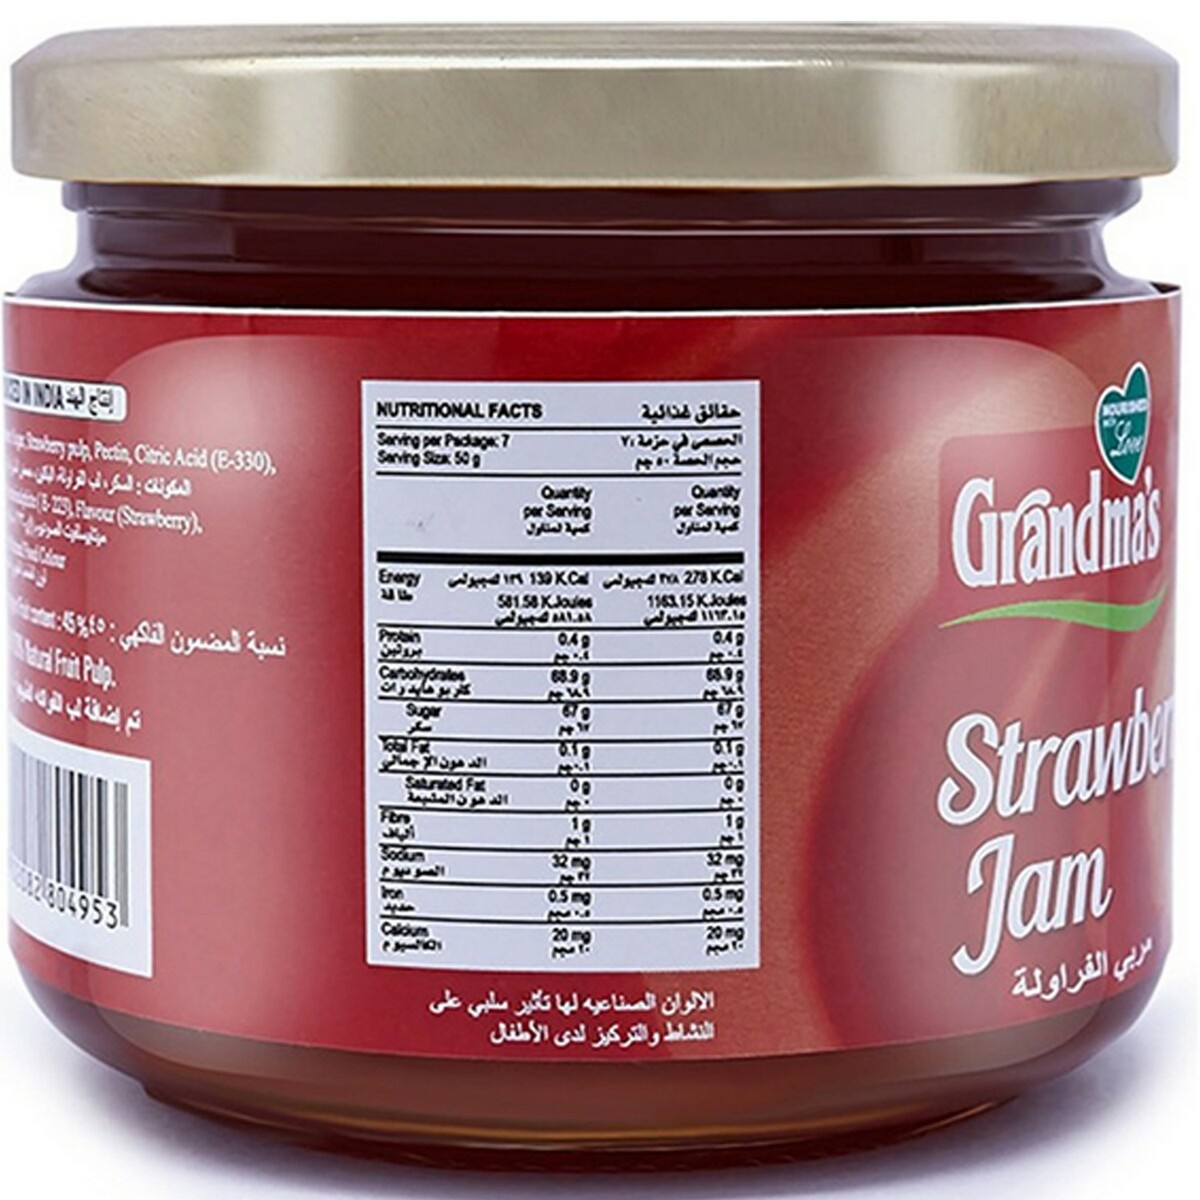 Grandmas Strawberry Jam 350G